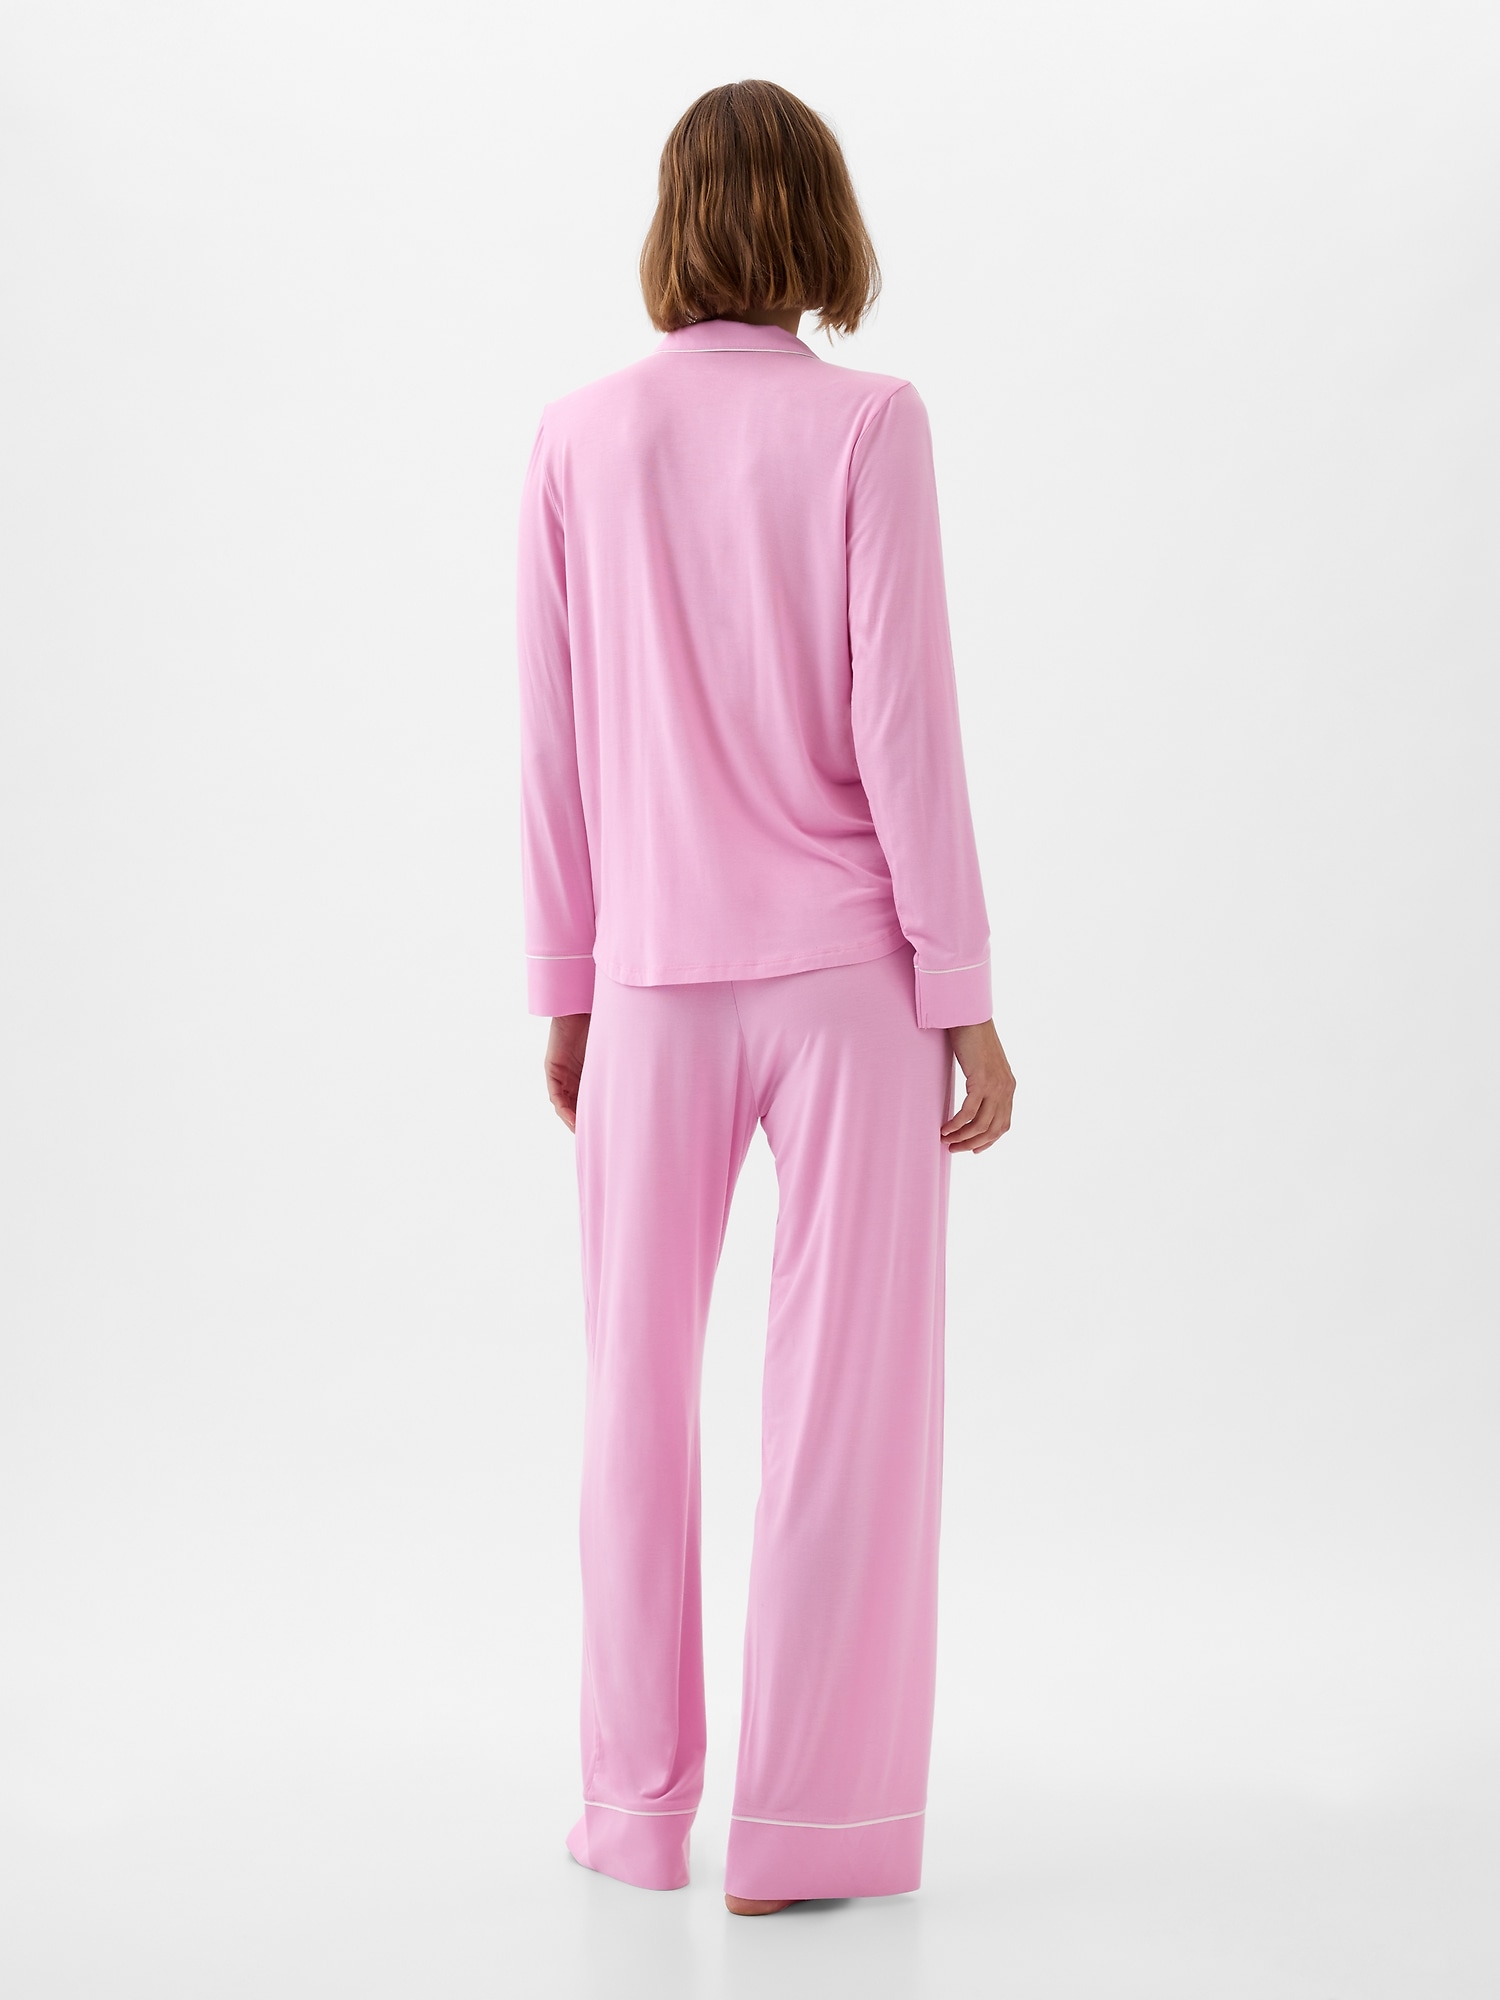 100% Cotton PJ Pants Women Soft Sleep Pants Cute Pink Pjs Lounge